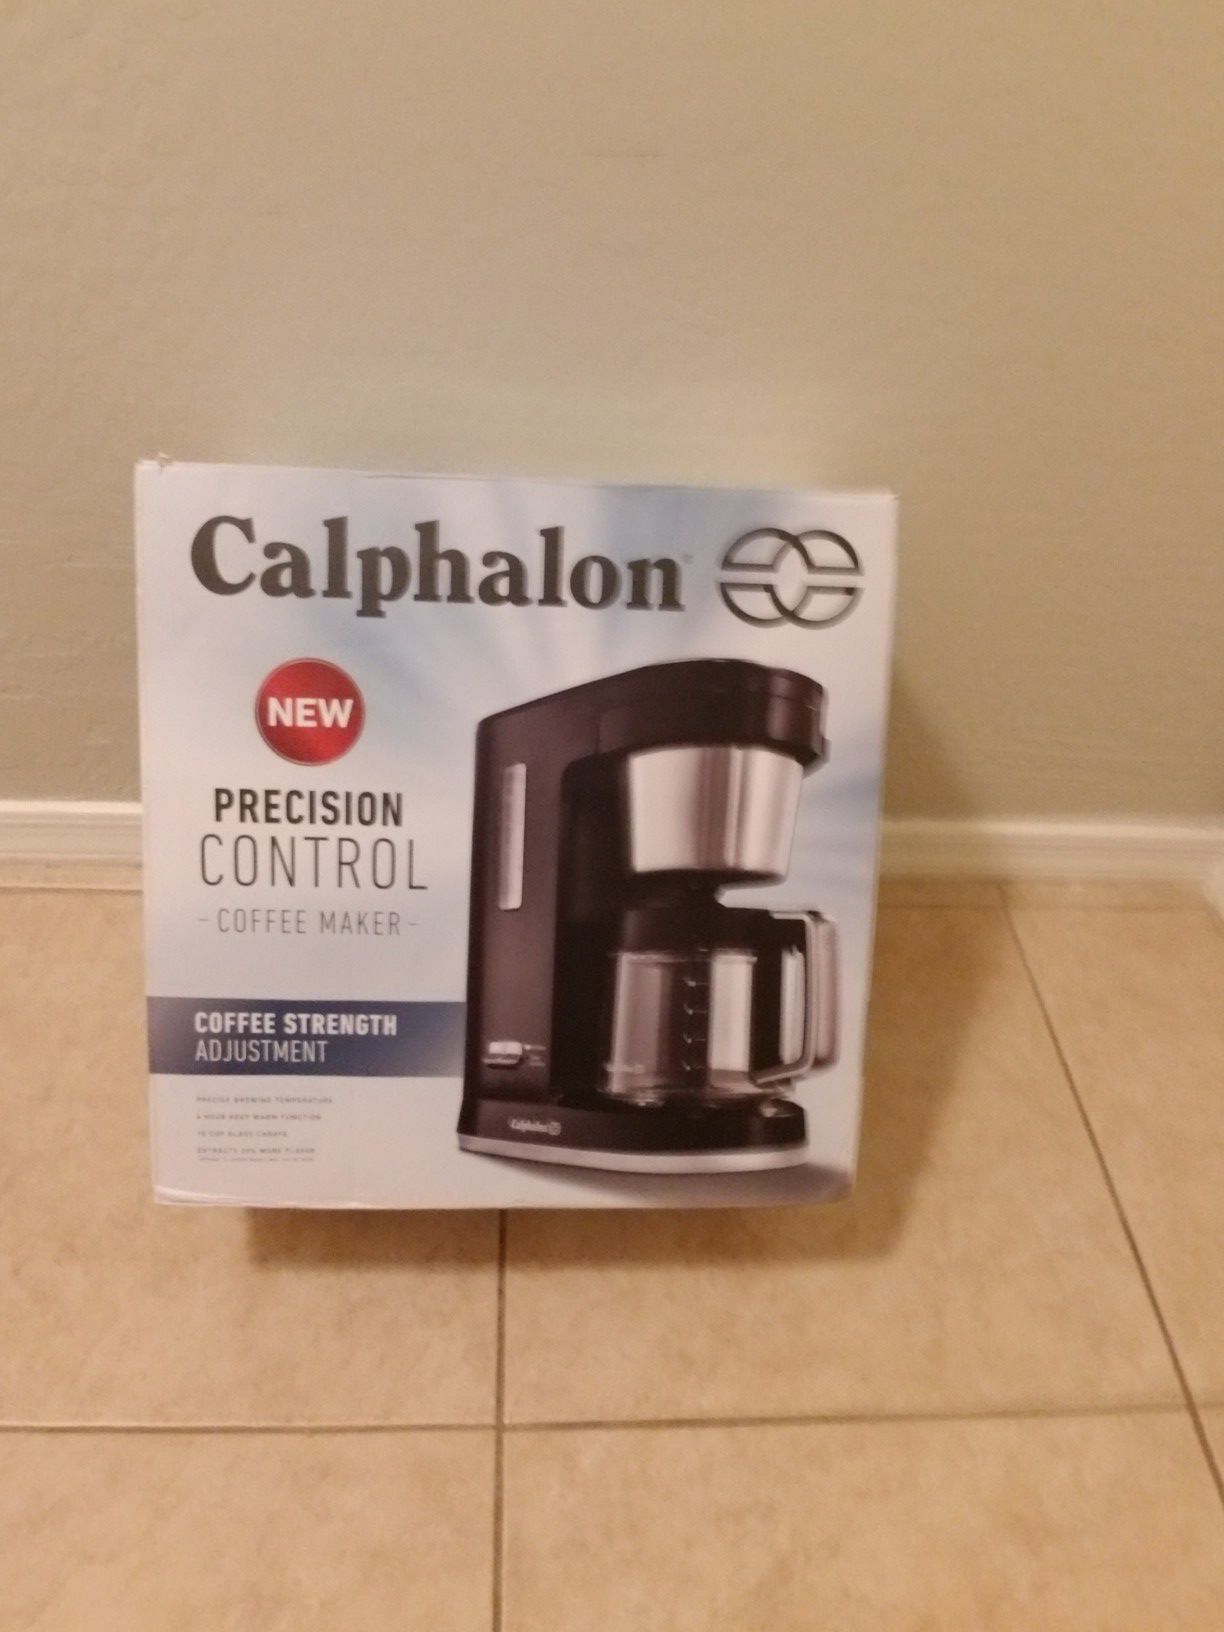 Calphalon precision control coffee maker